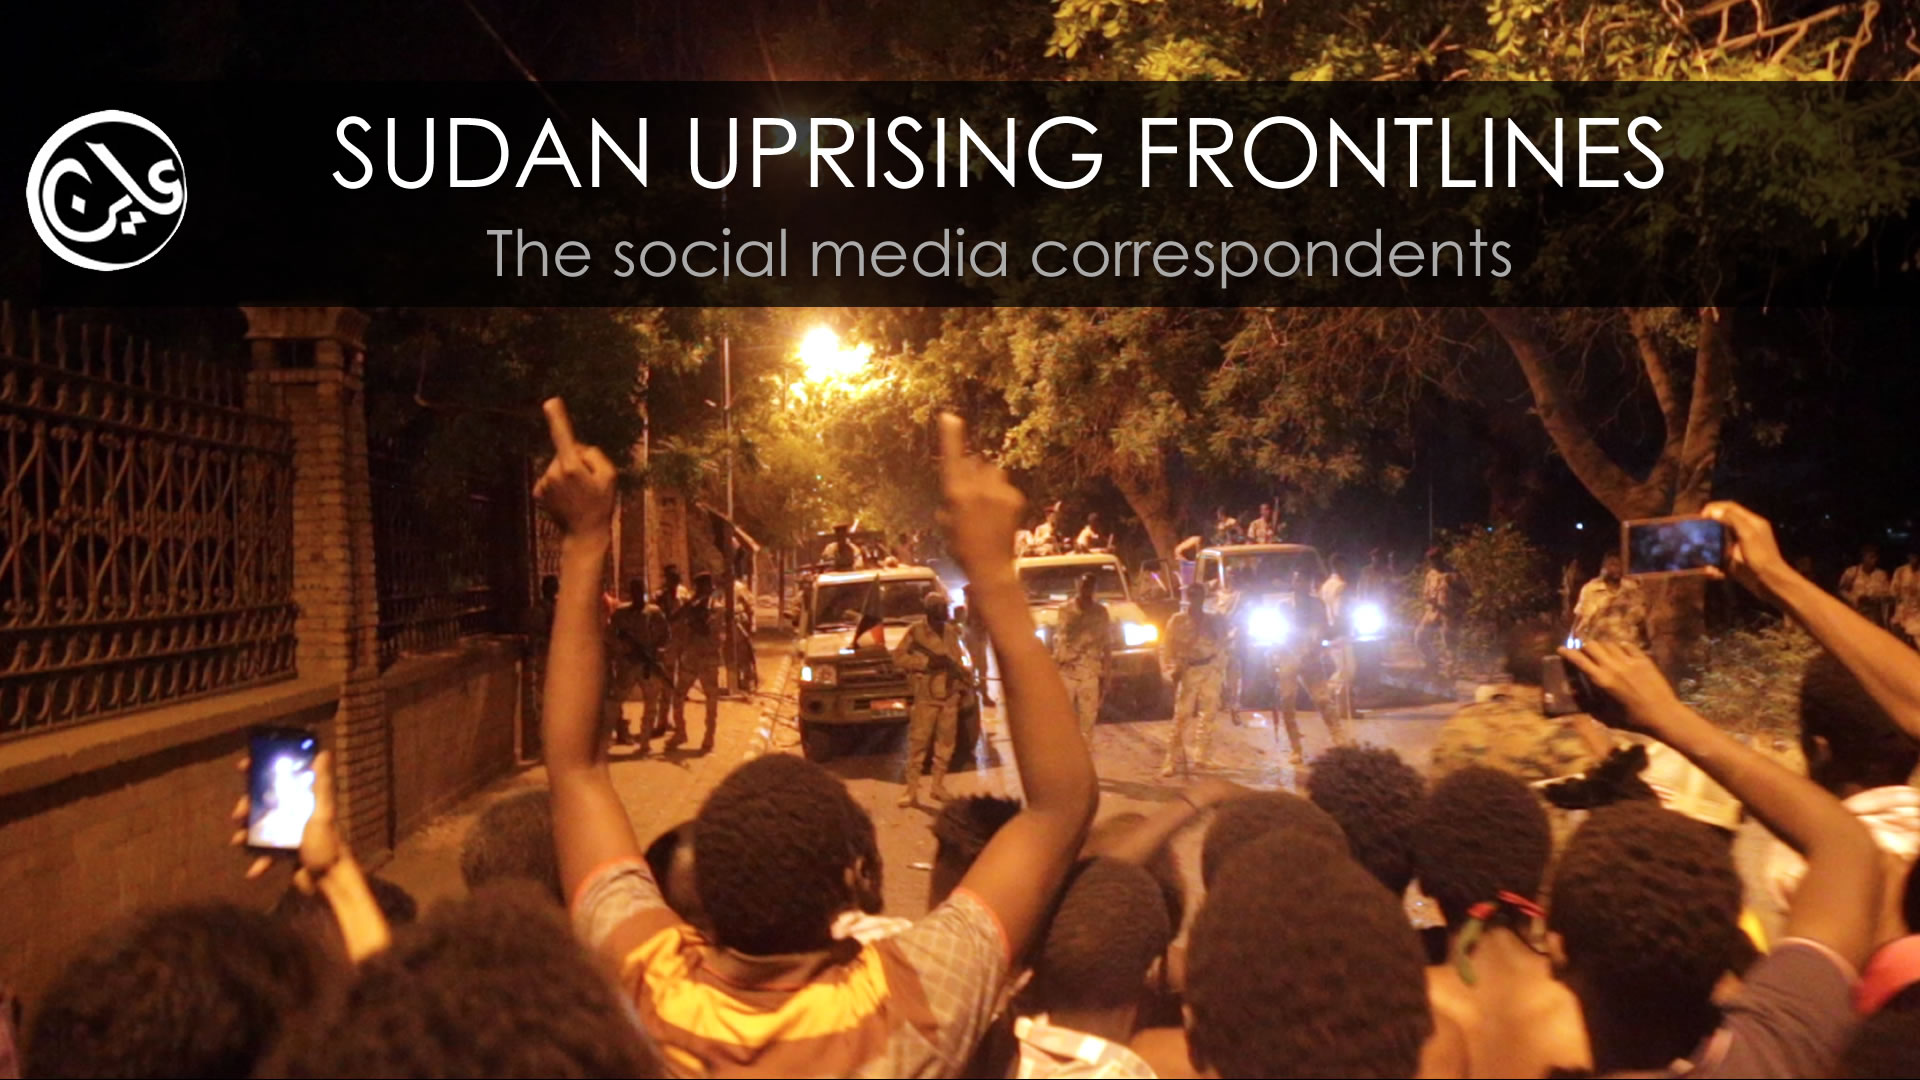 Sudan uprising frontlines, the social media correspondents